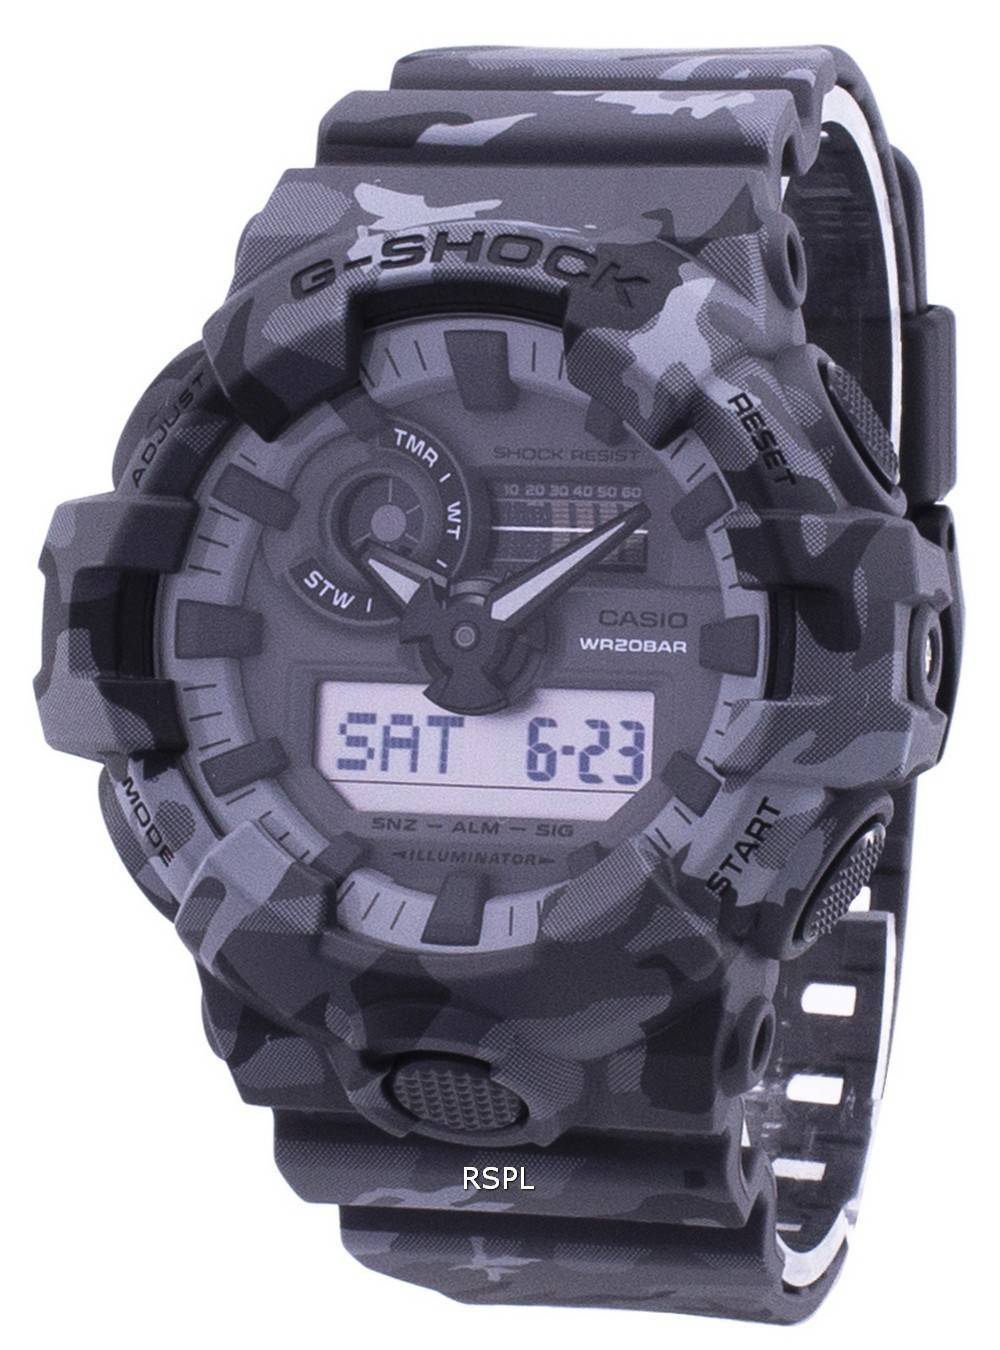 Casio Illuminator G-Shock Shock Resistant Analog Digital ...